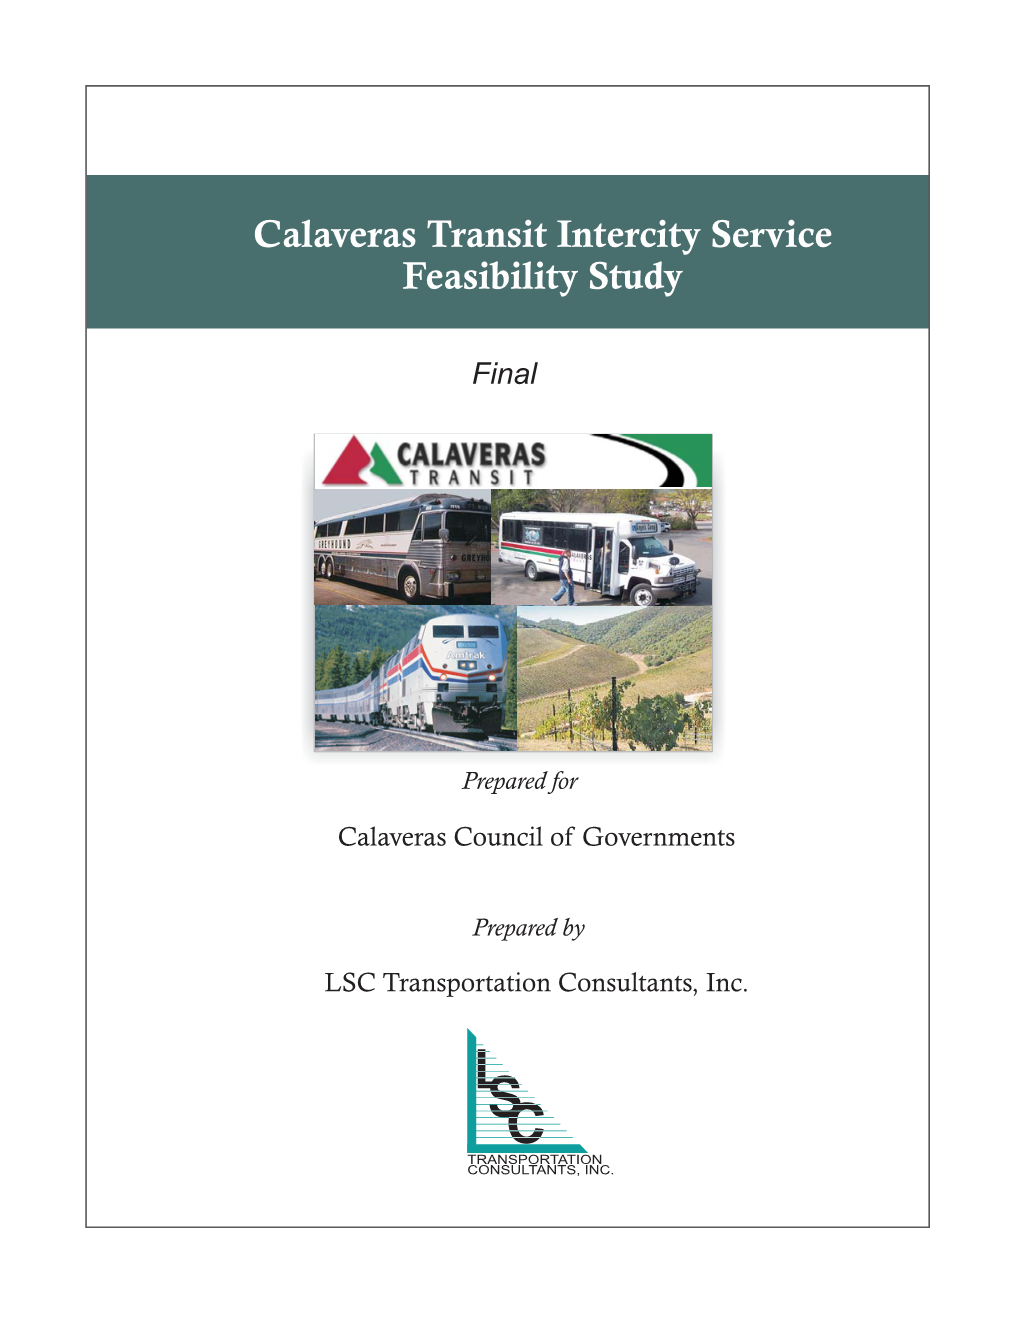 Calaveras Transit Intercity Service Feasibility Study